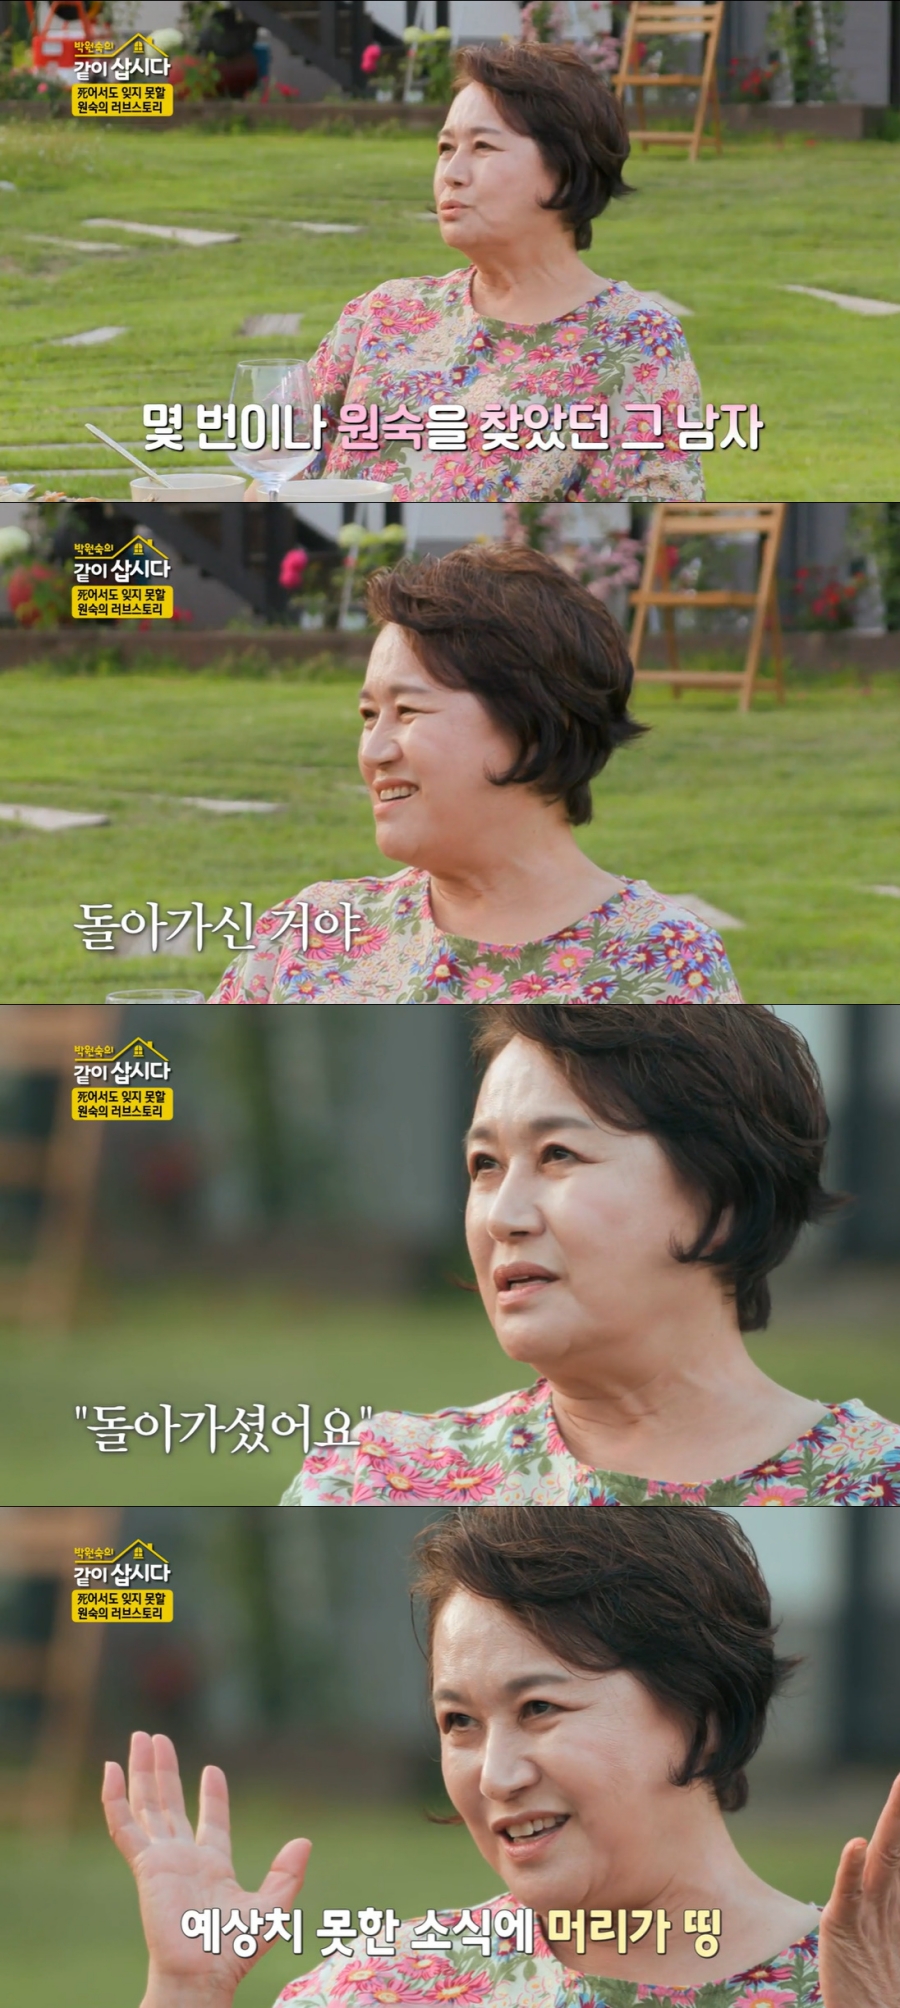 ▲ KBS2 예능 프로그램 '박원숙의 같이 삽시다' 배우 박원숙. 출처| KBS